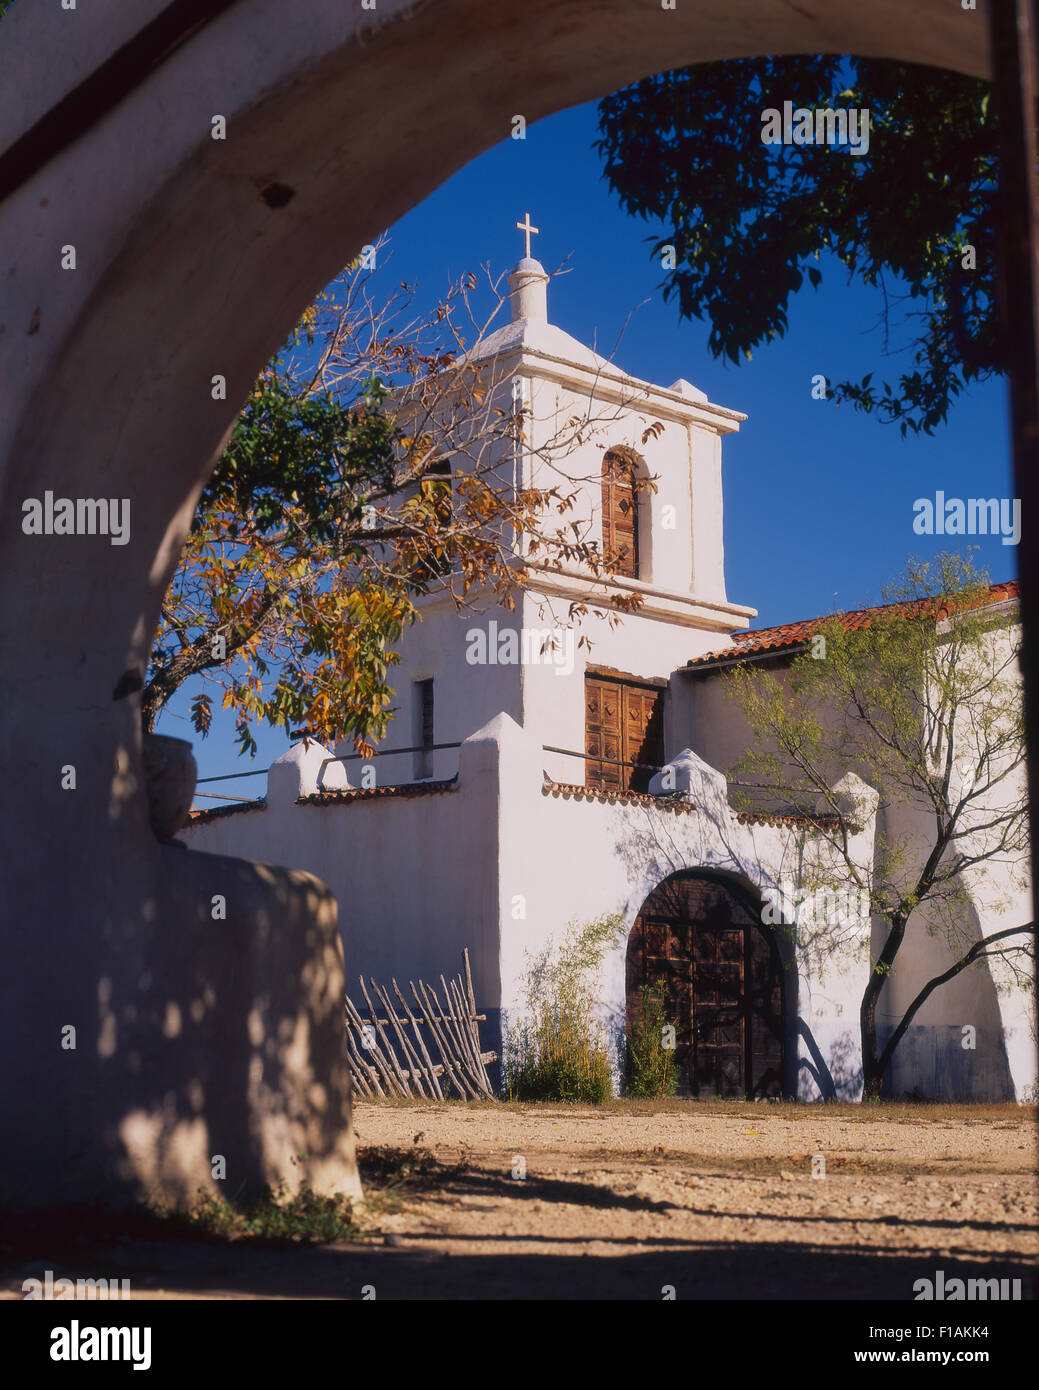 Alamo Village Stock Photo